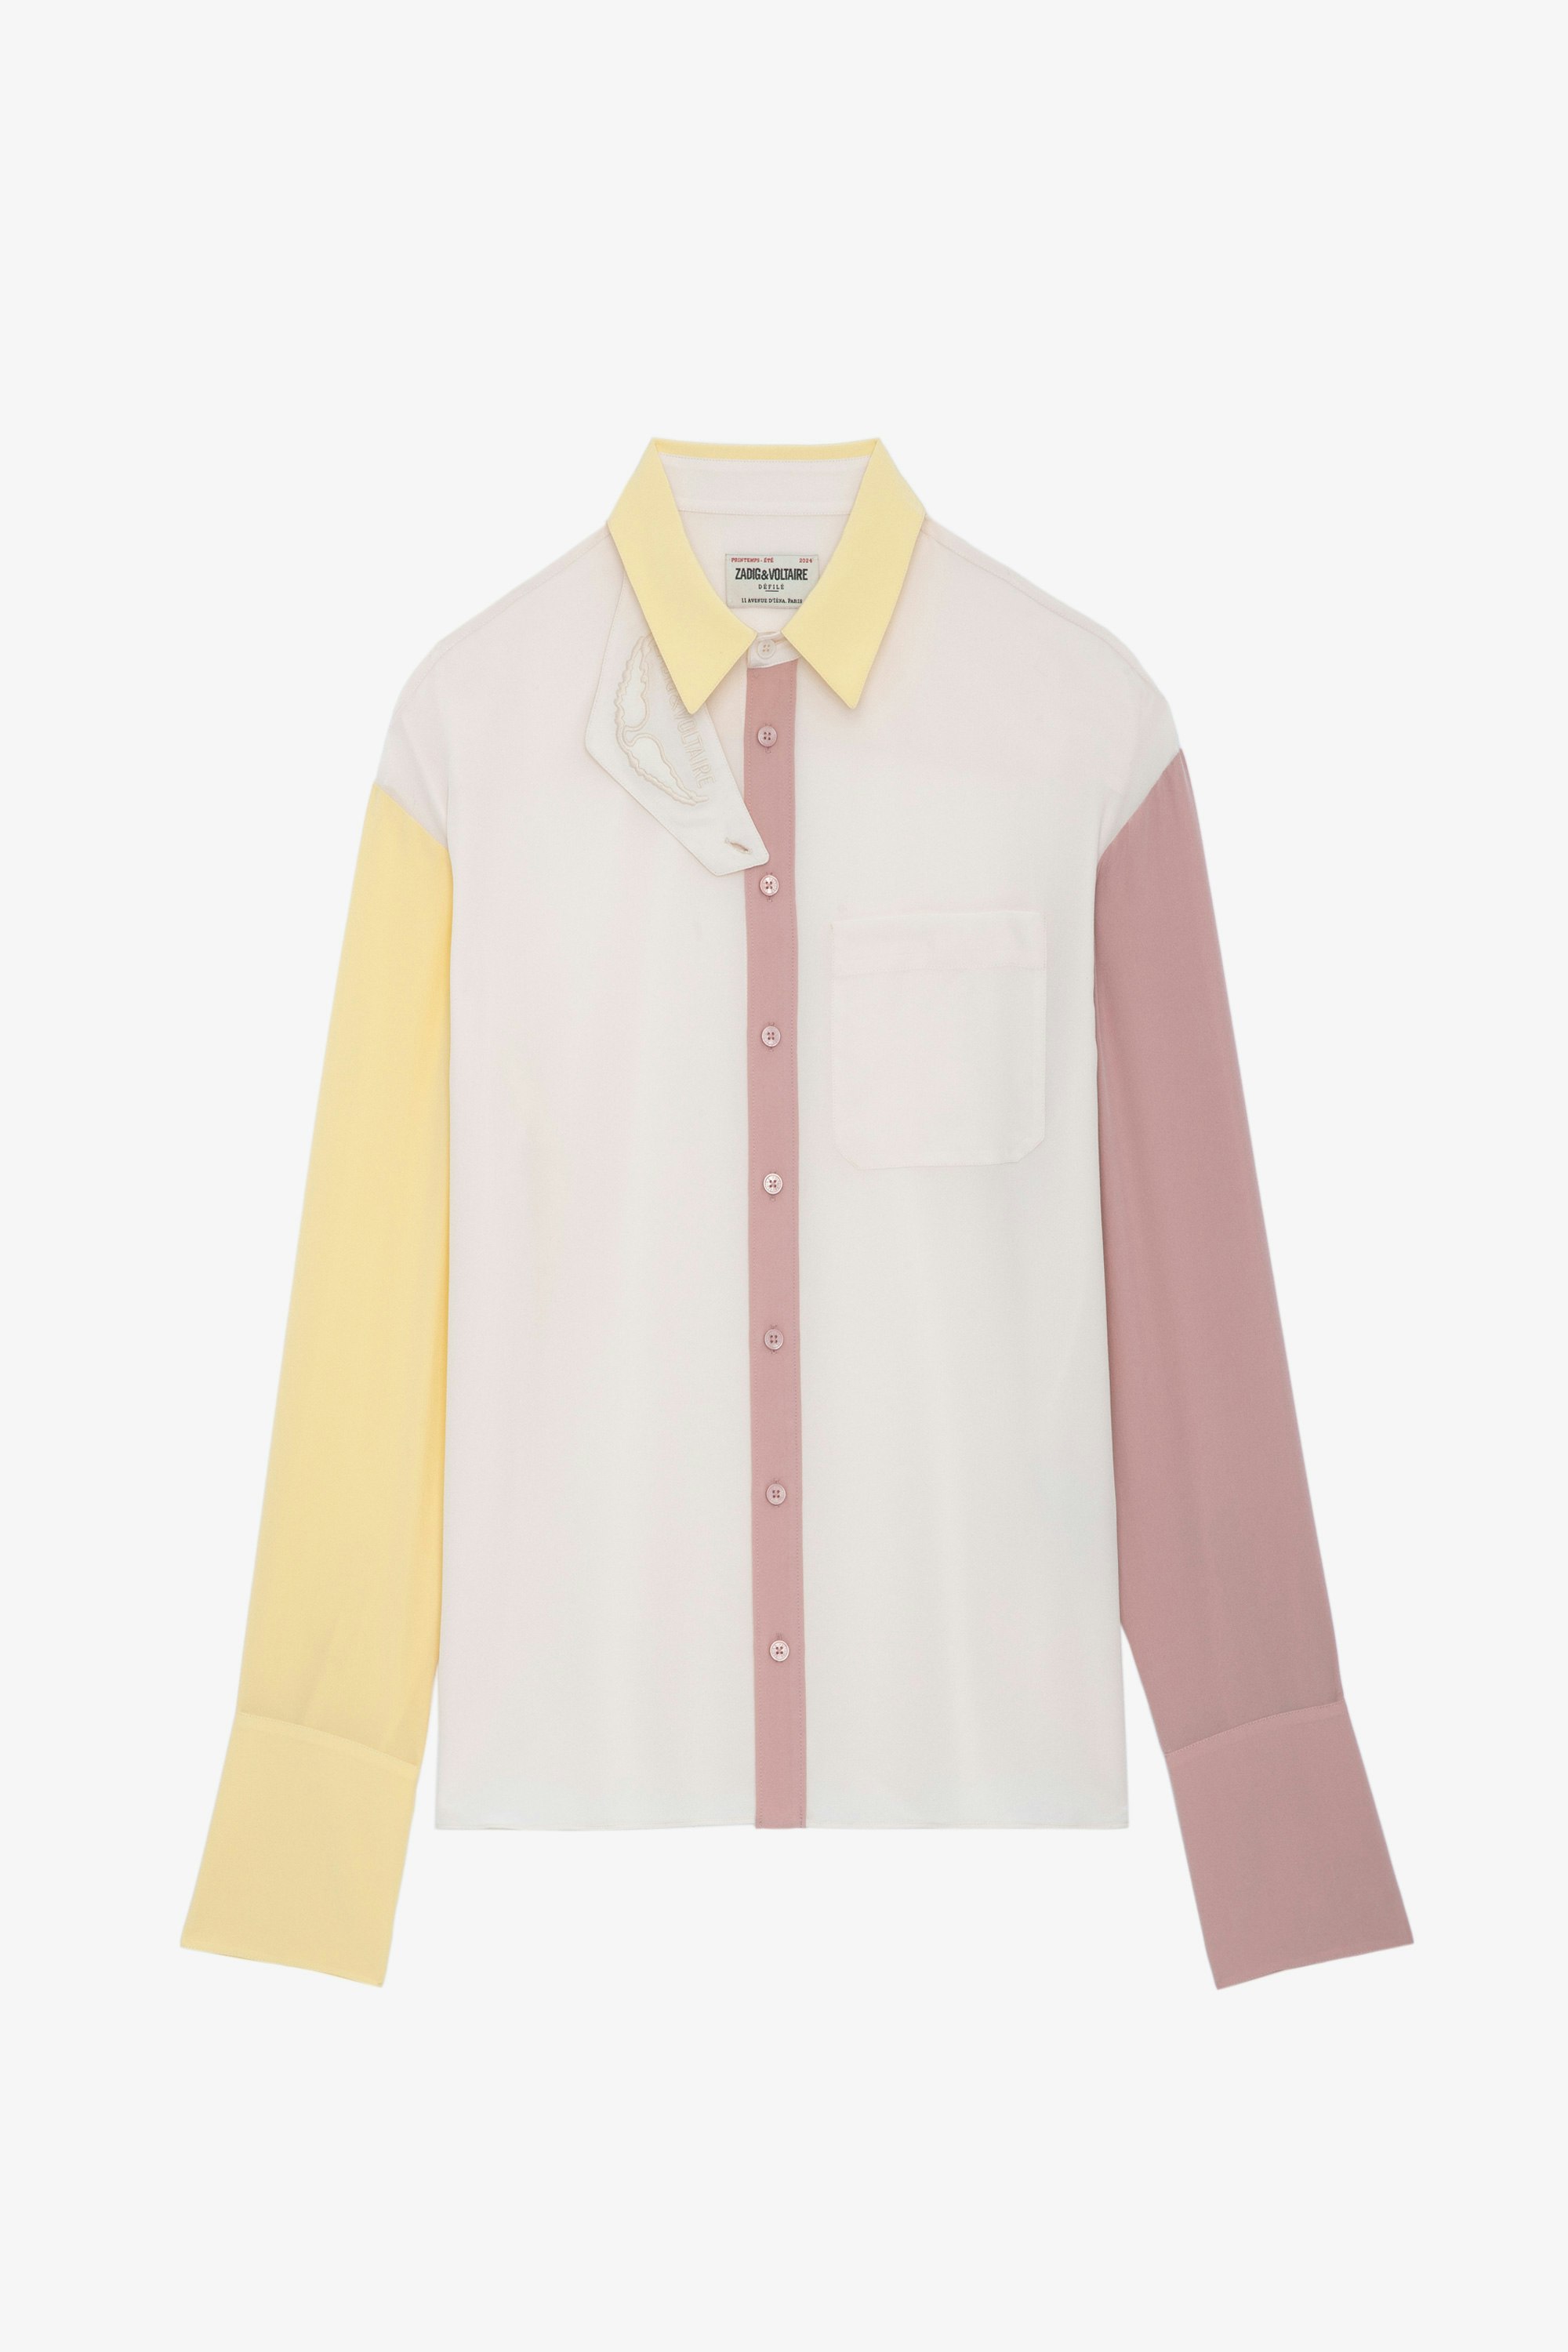 Tyrone Shirt - Women's colorblocked silk shirt with detachable tab at collar.